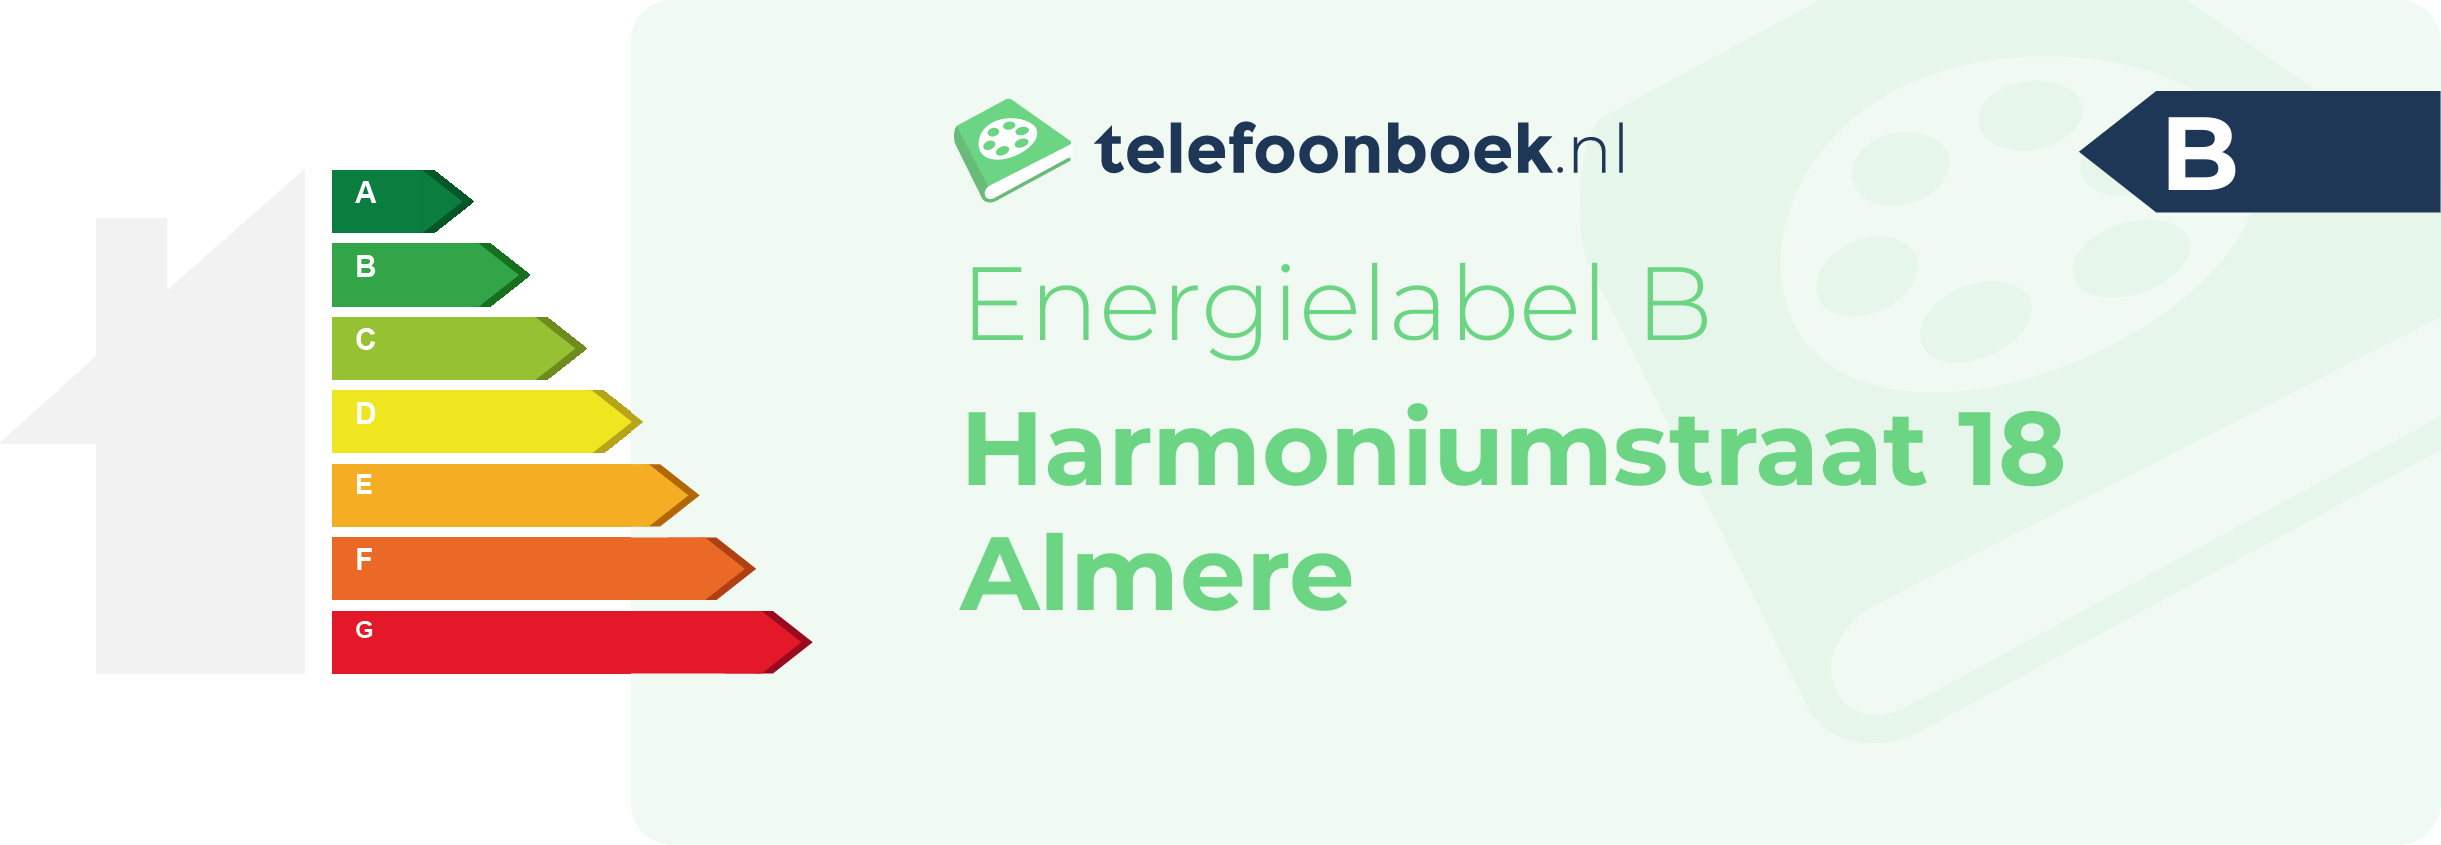 Energielabel Harmoniumstraat 18 Almere